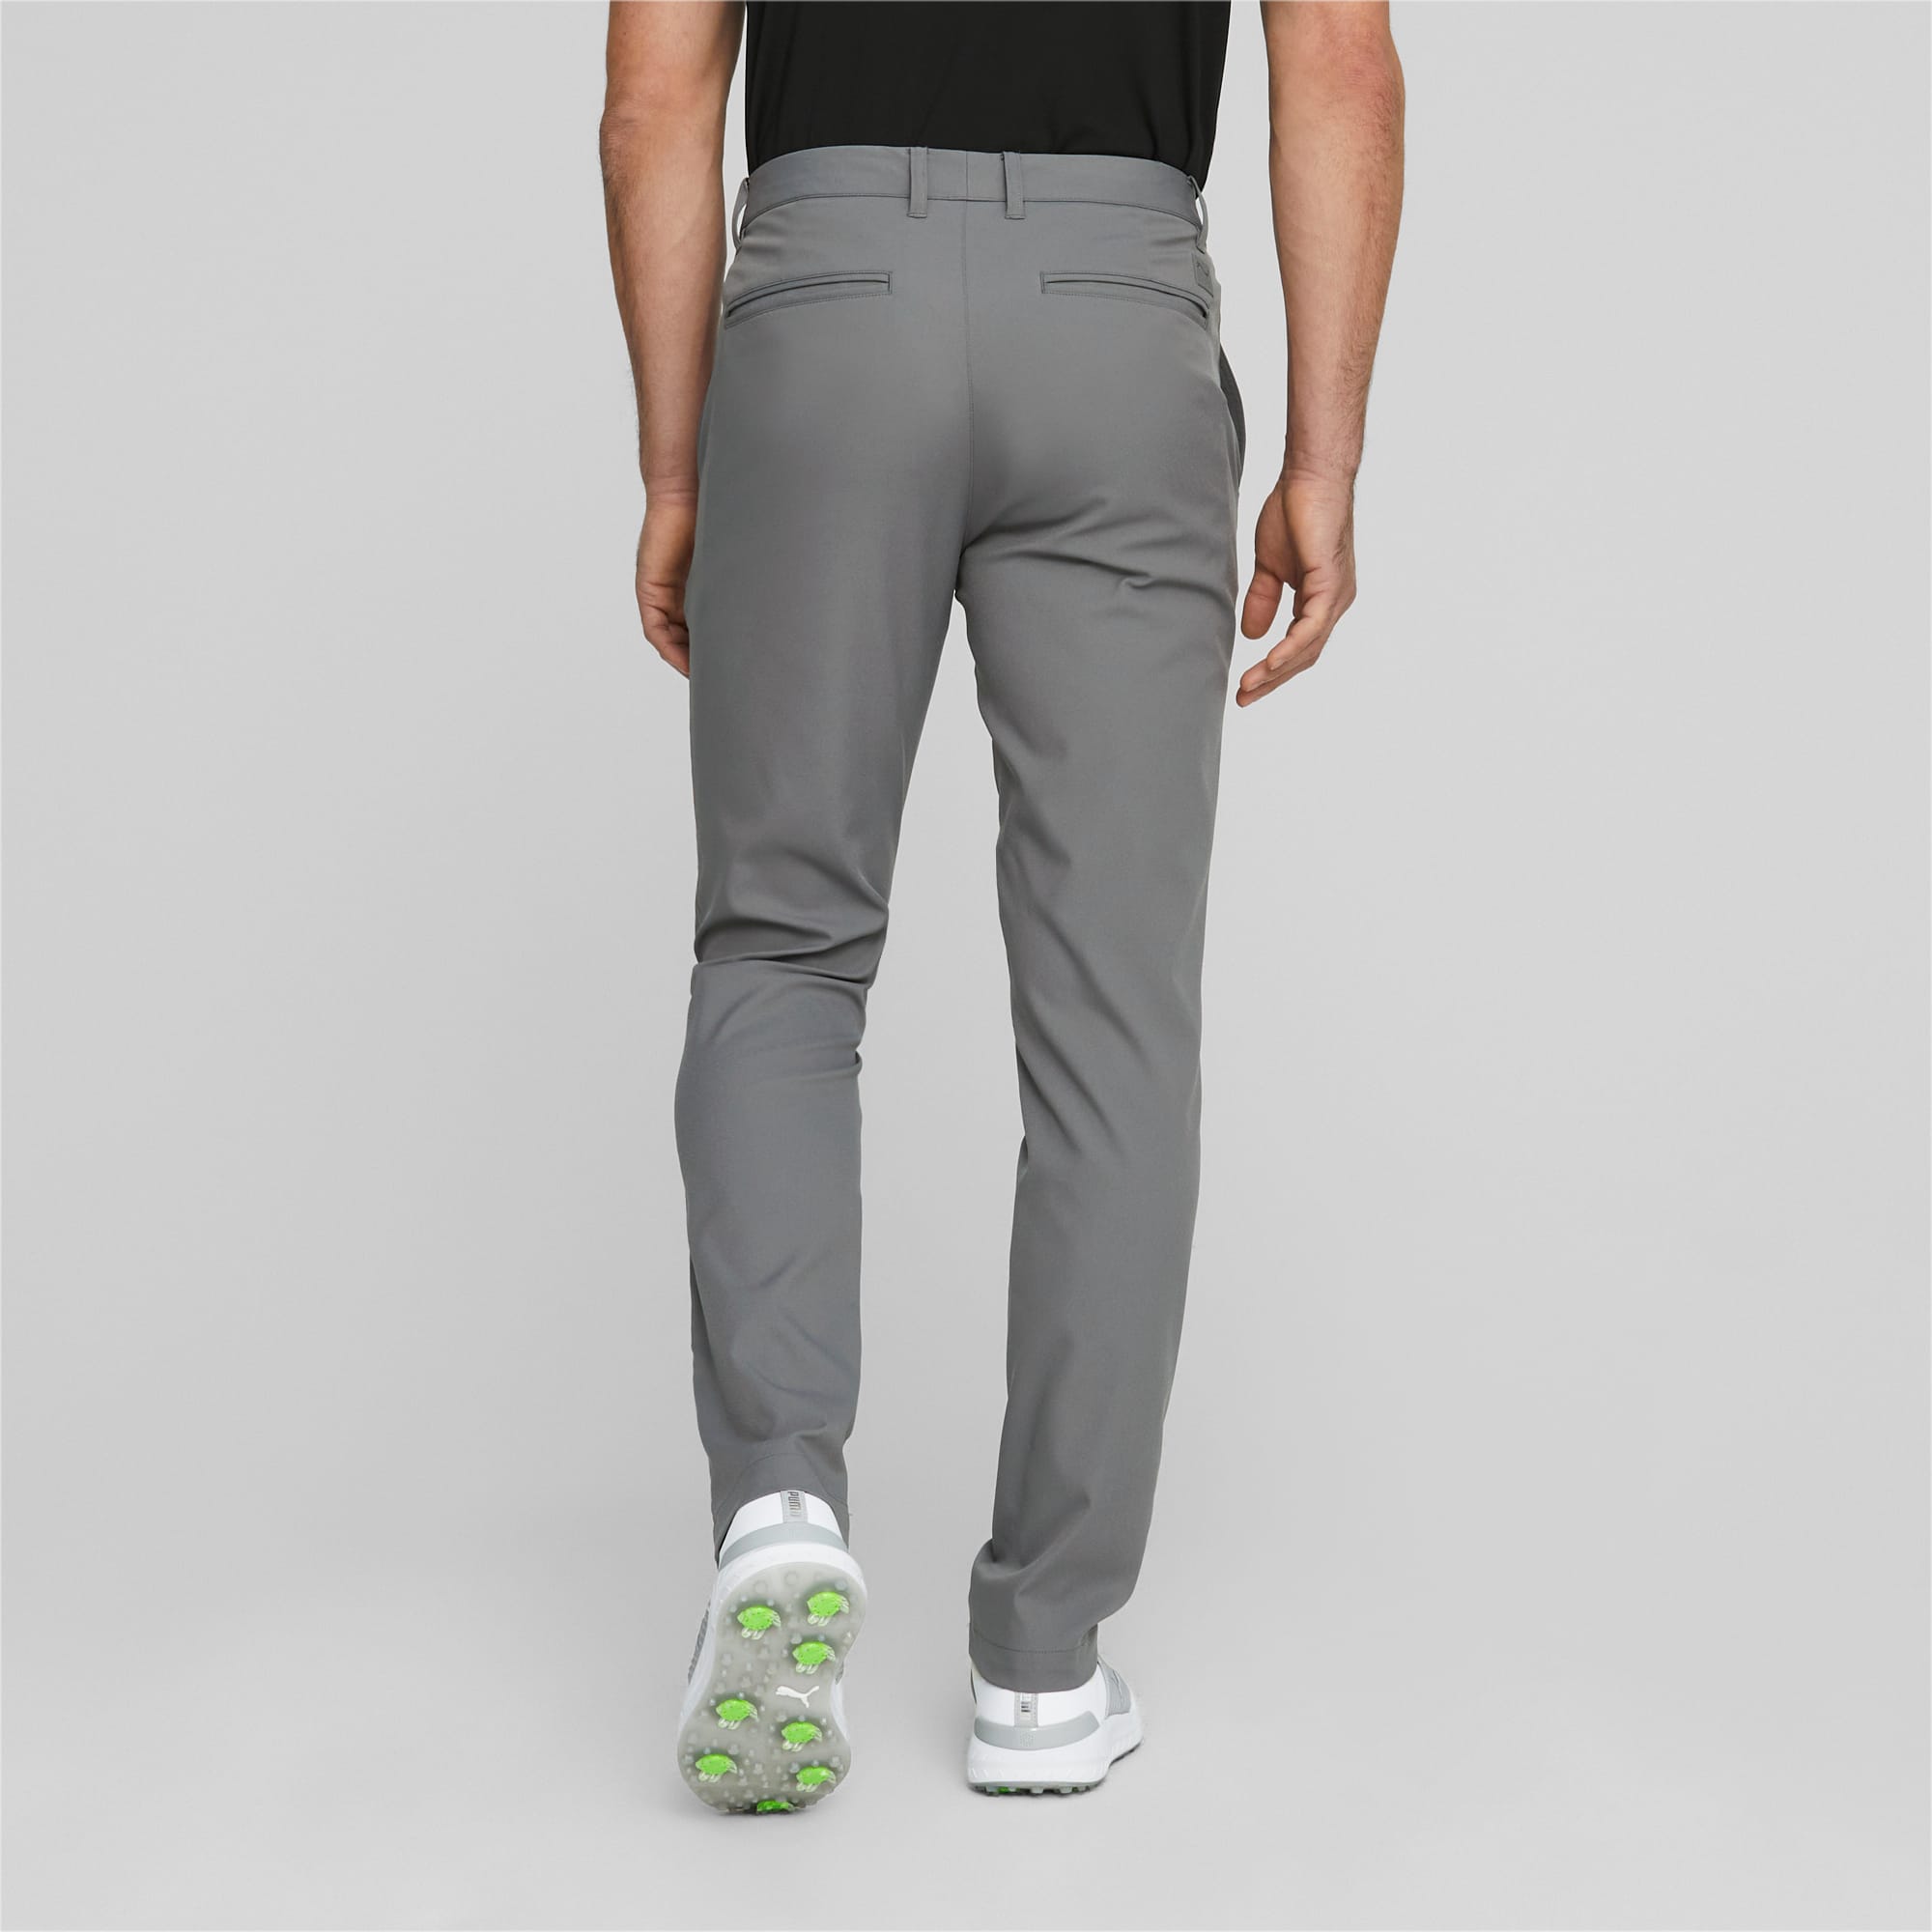 PUMA Dealer Tailored Golf Pants Men, Slate Sky, Size 38/32, Clothing